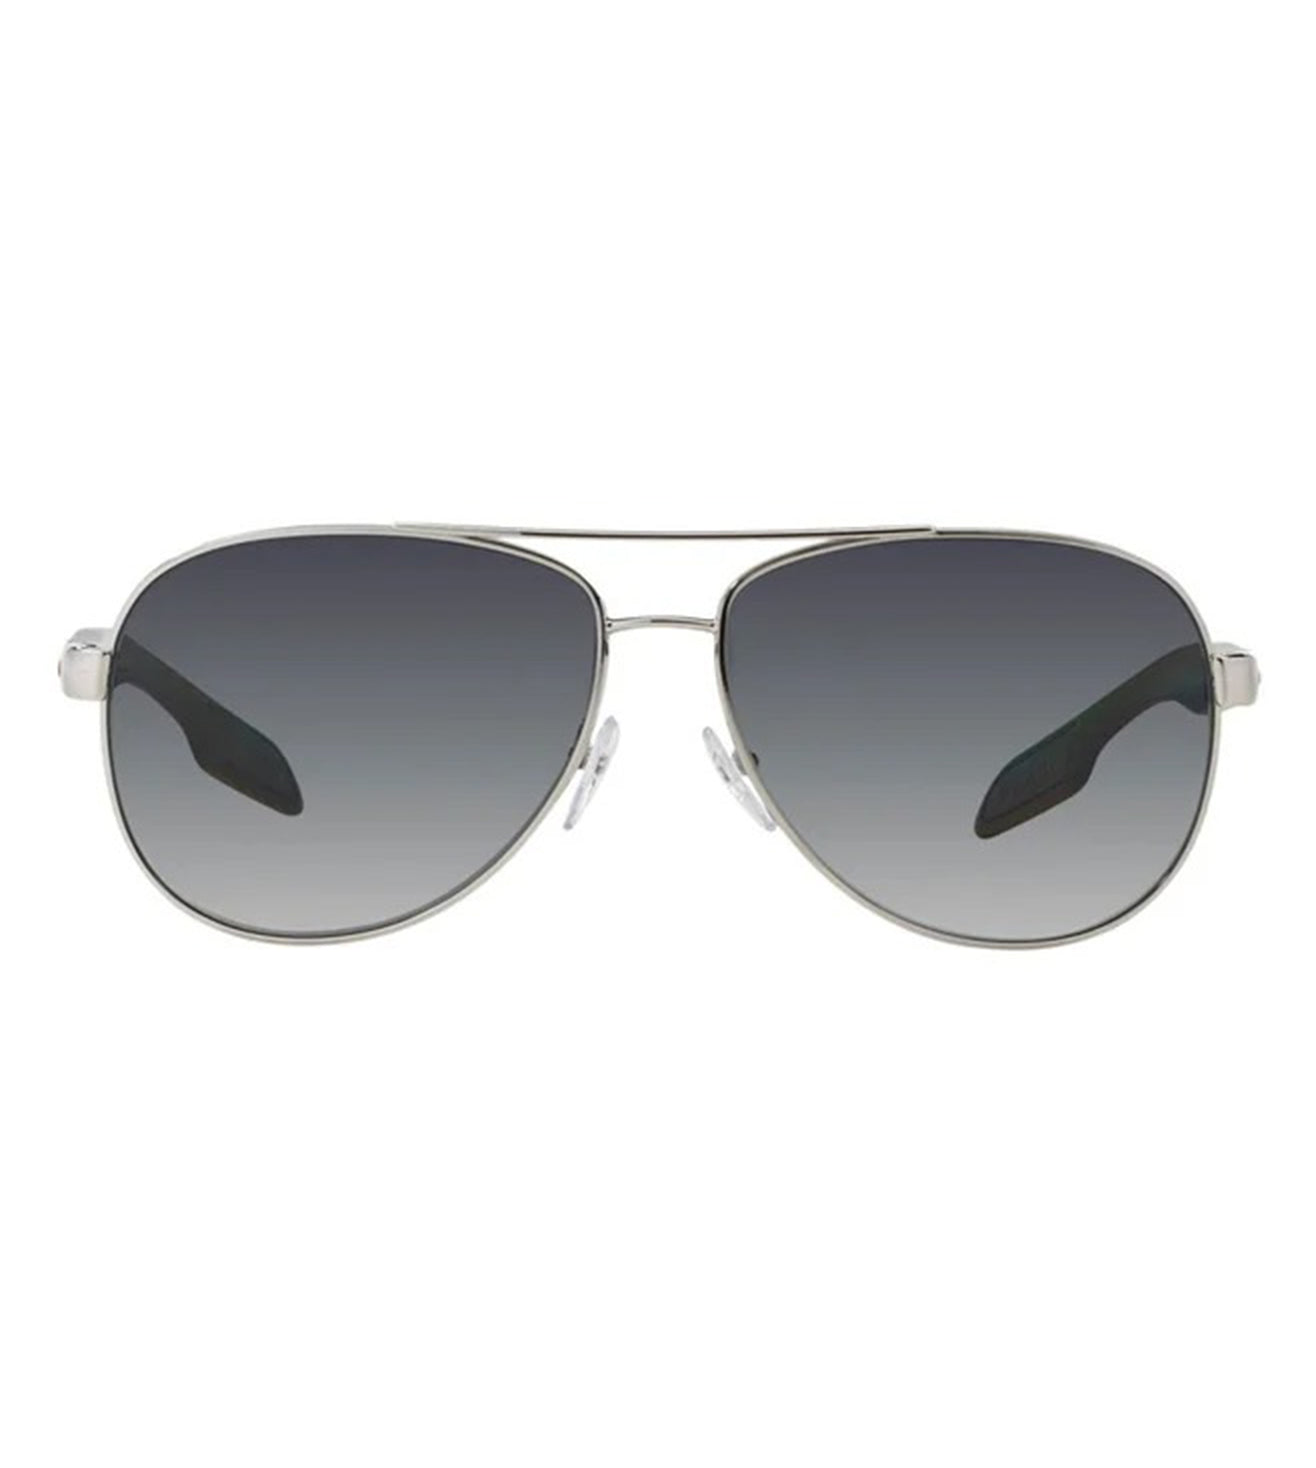 Prada Men's Grey Aviator Sunglasses